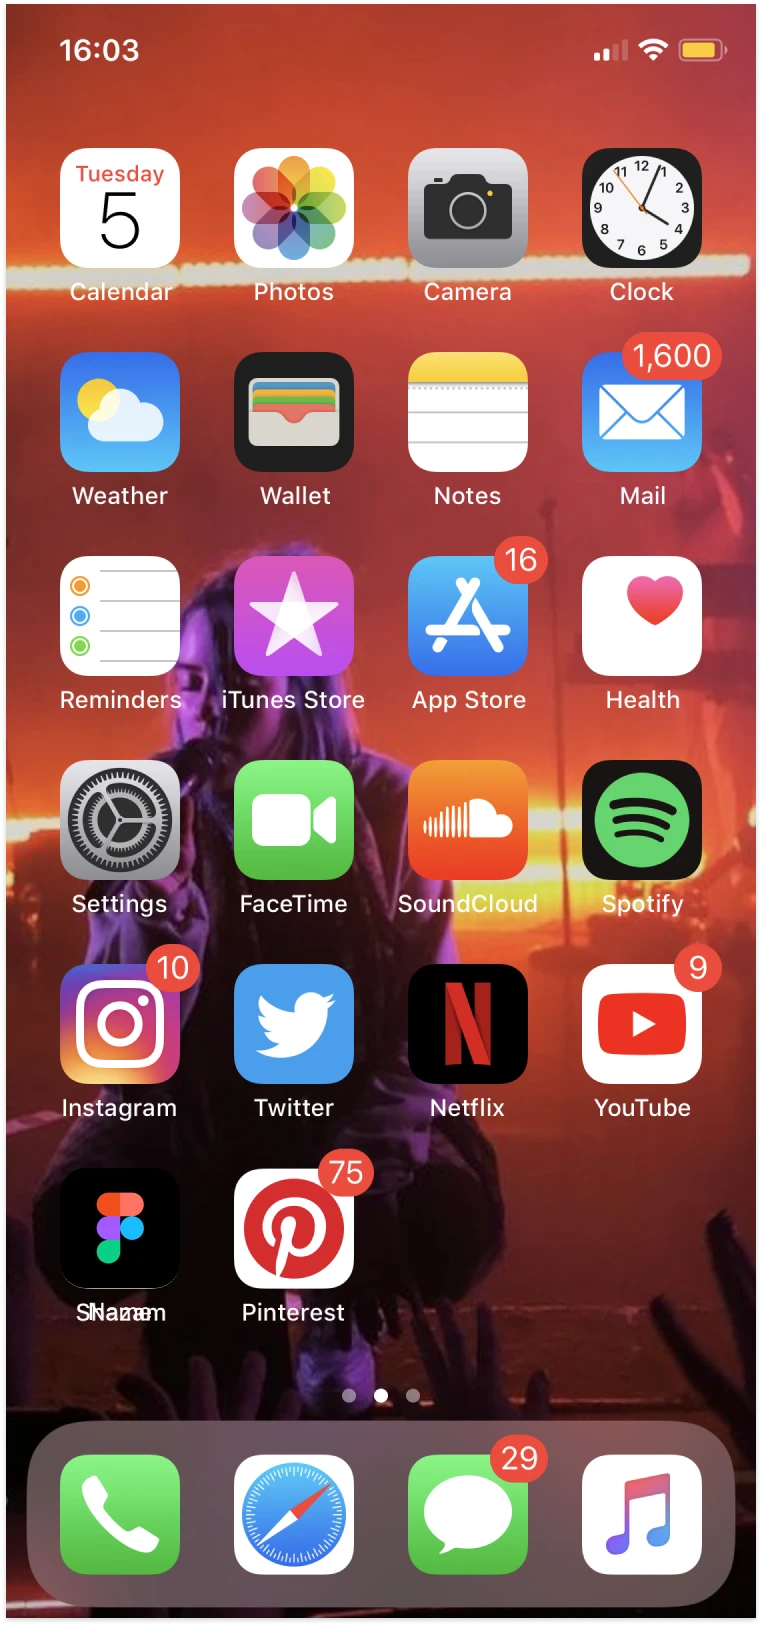 iPhone receiving push notification